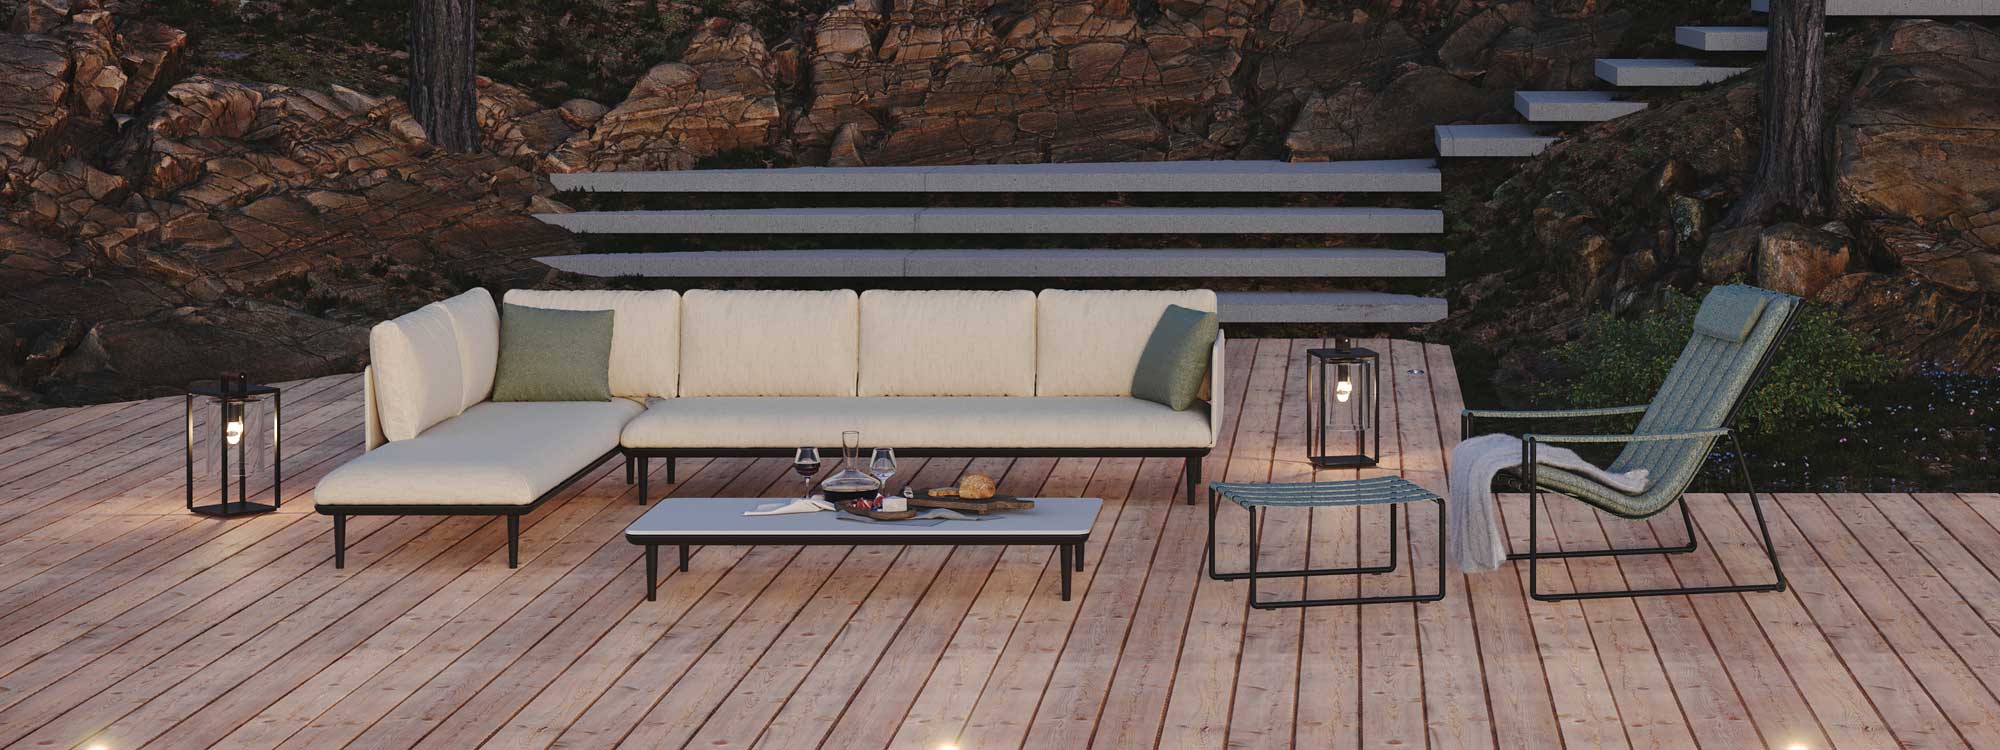 Image of Royal Botania Styletto outdoor lounge set on decking